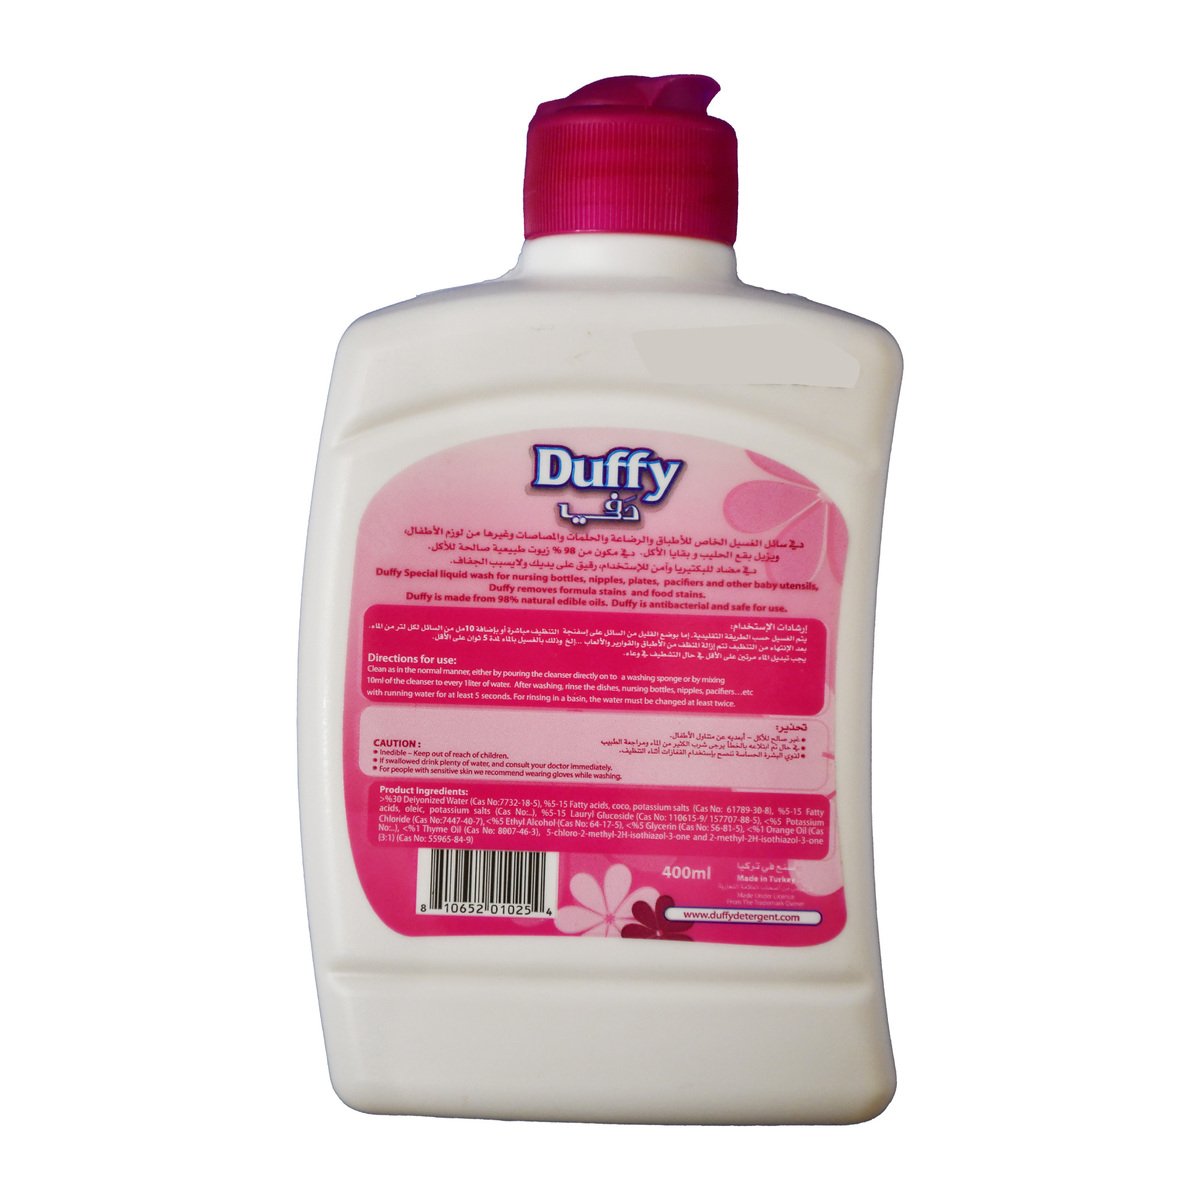 Duffy Baby Dish Washing Liquid With Orange Oil Scent 400ml